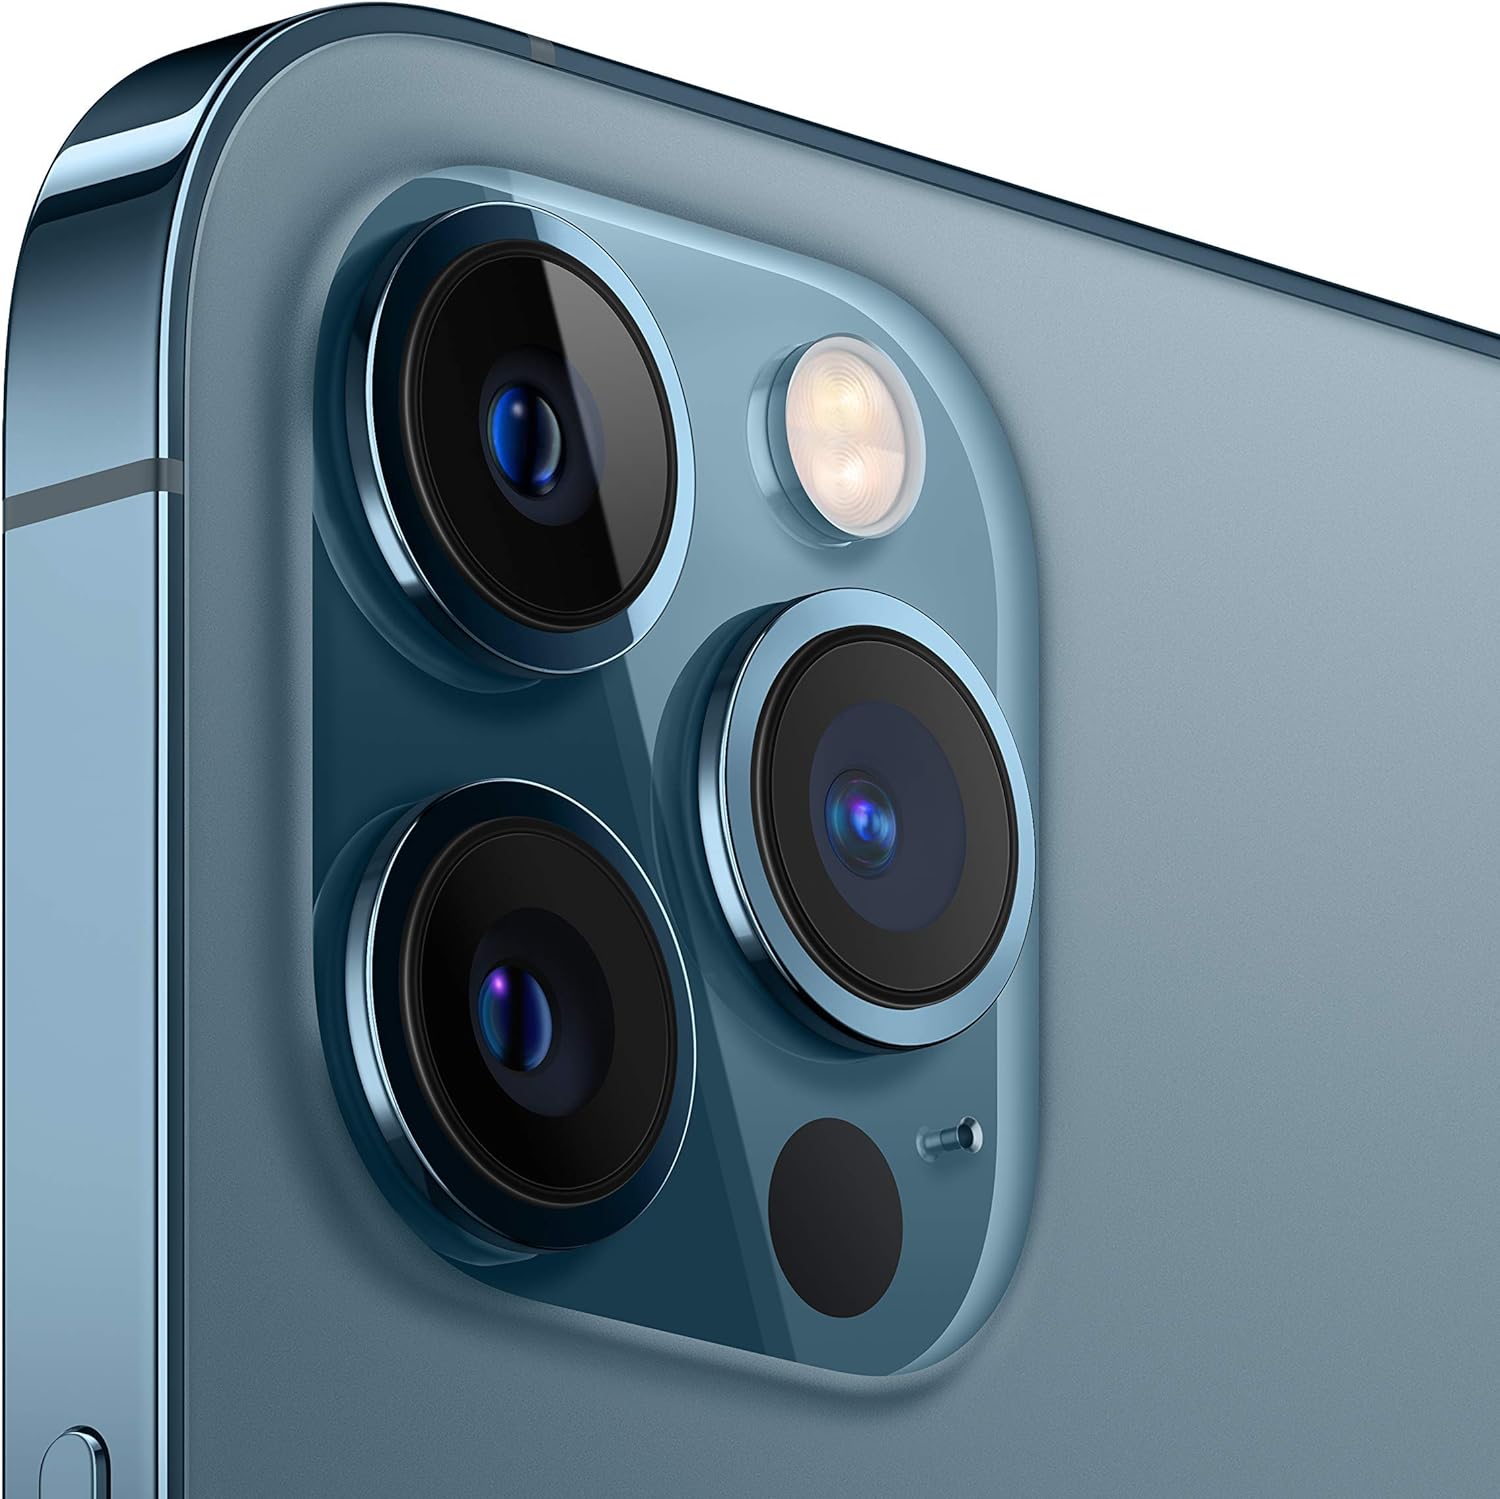 Apple iPhone 12 Pro Max (256GB) - Pacific Blue (Renewed)